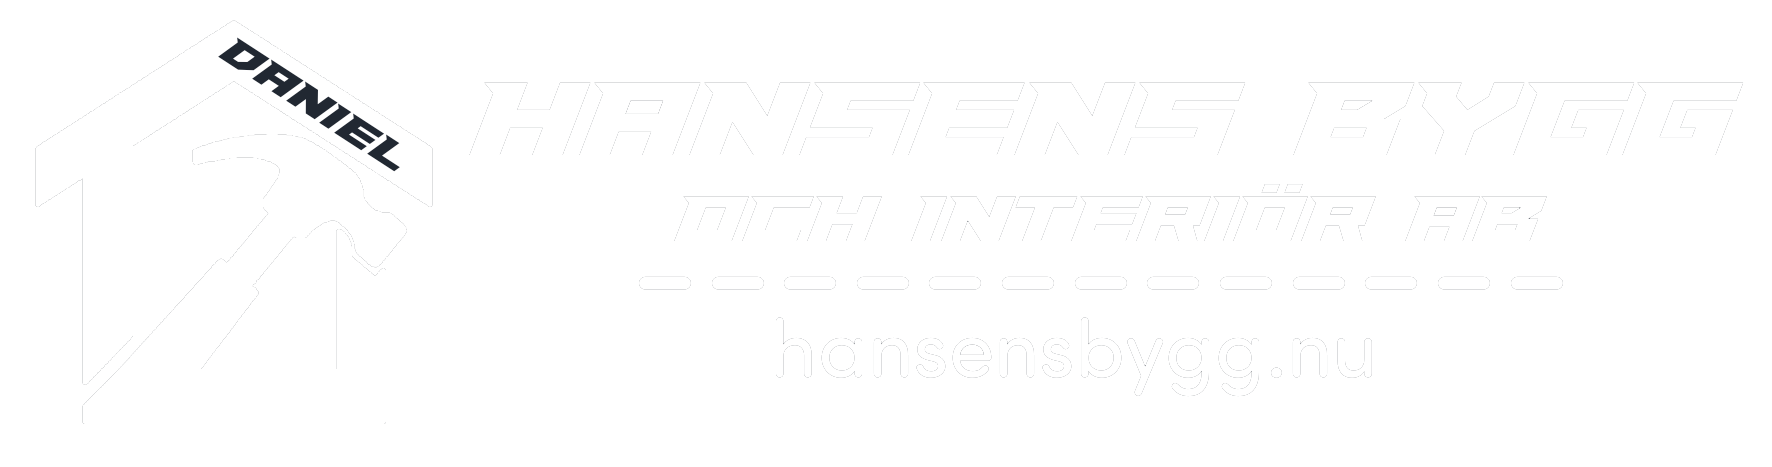 Daniel Hansens Bygg & Interiör AB 